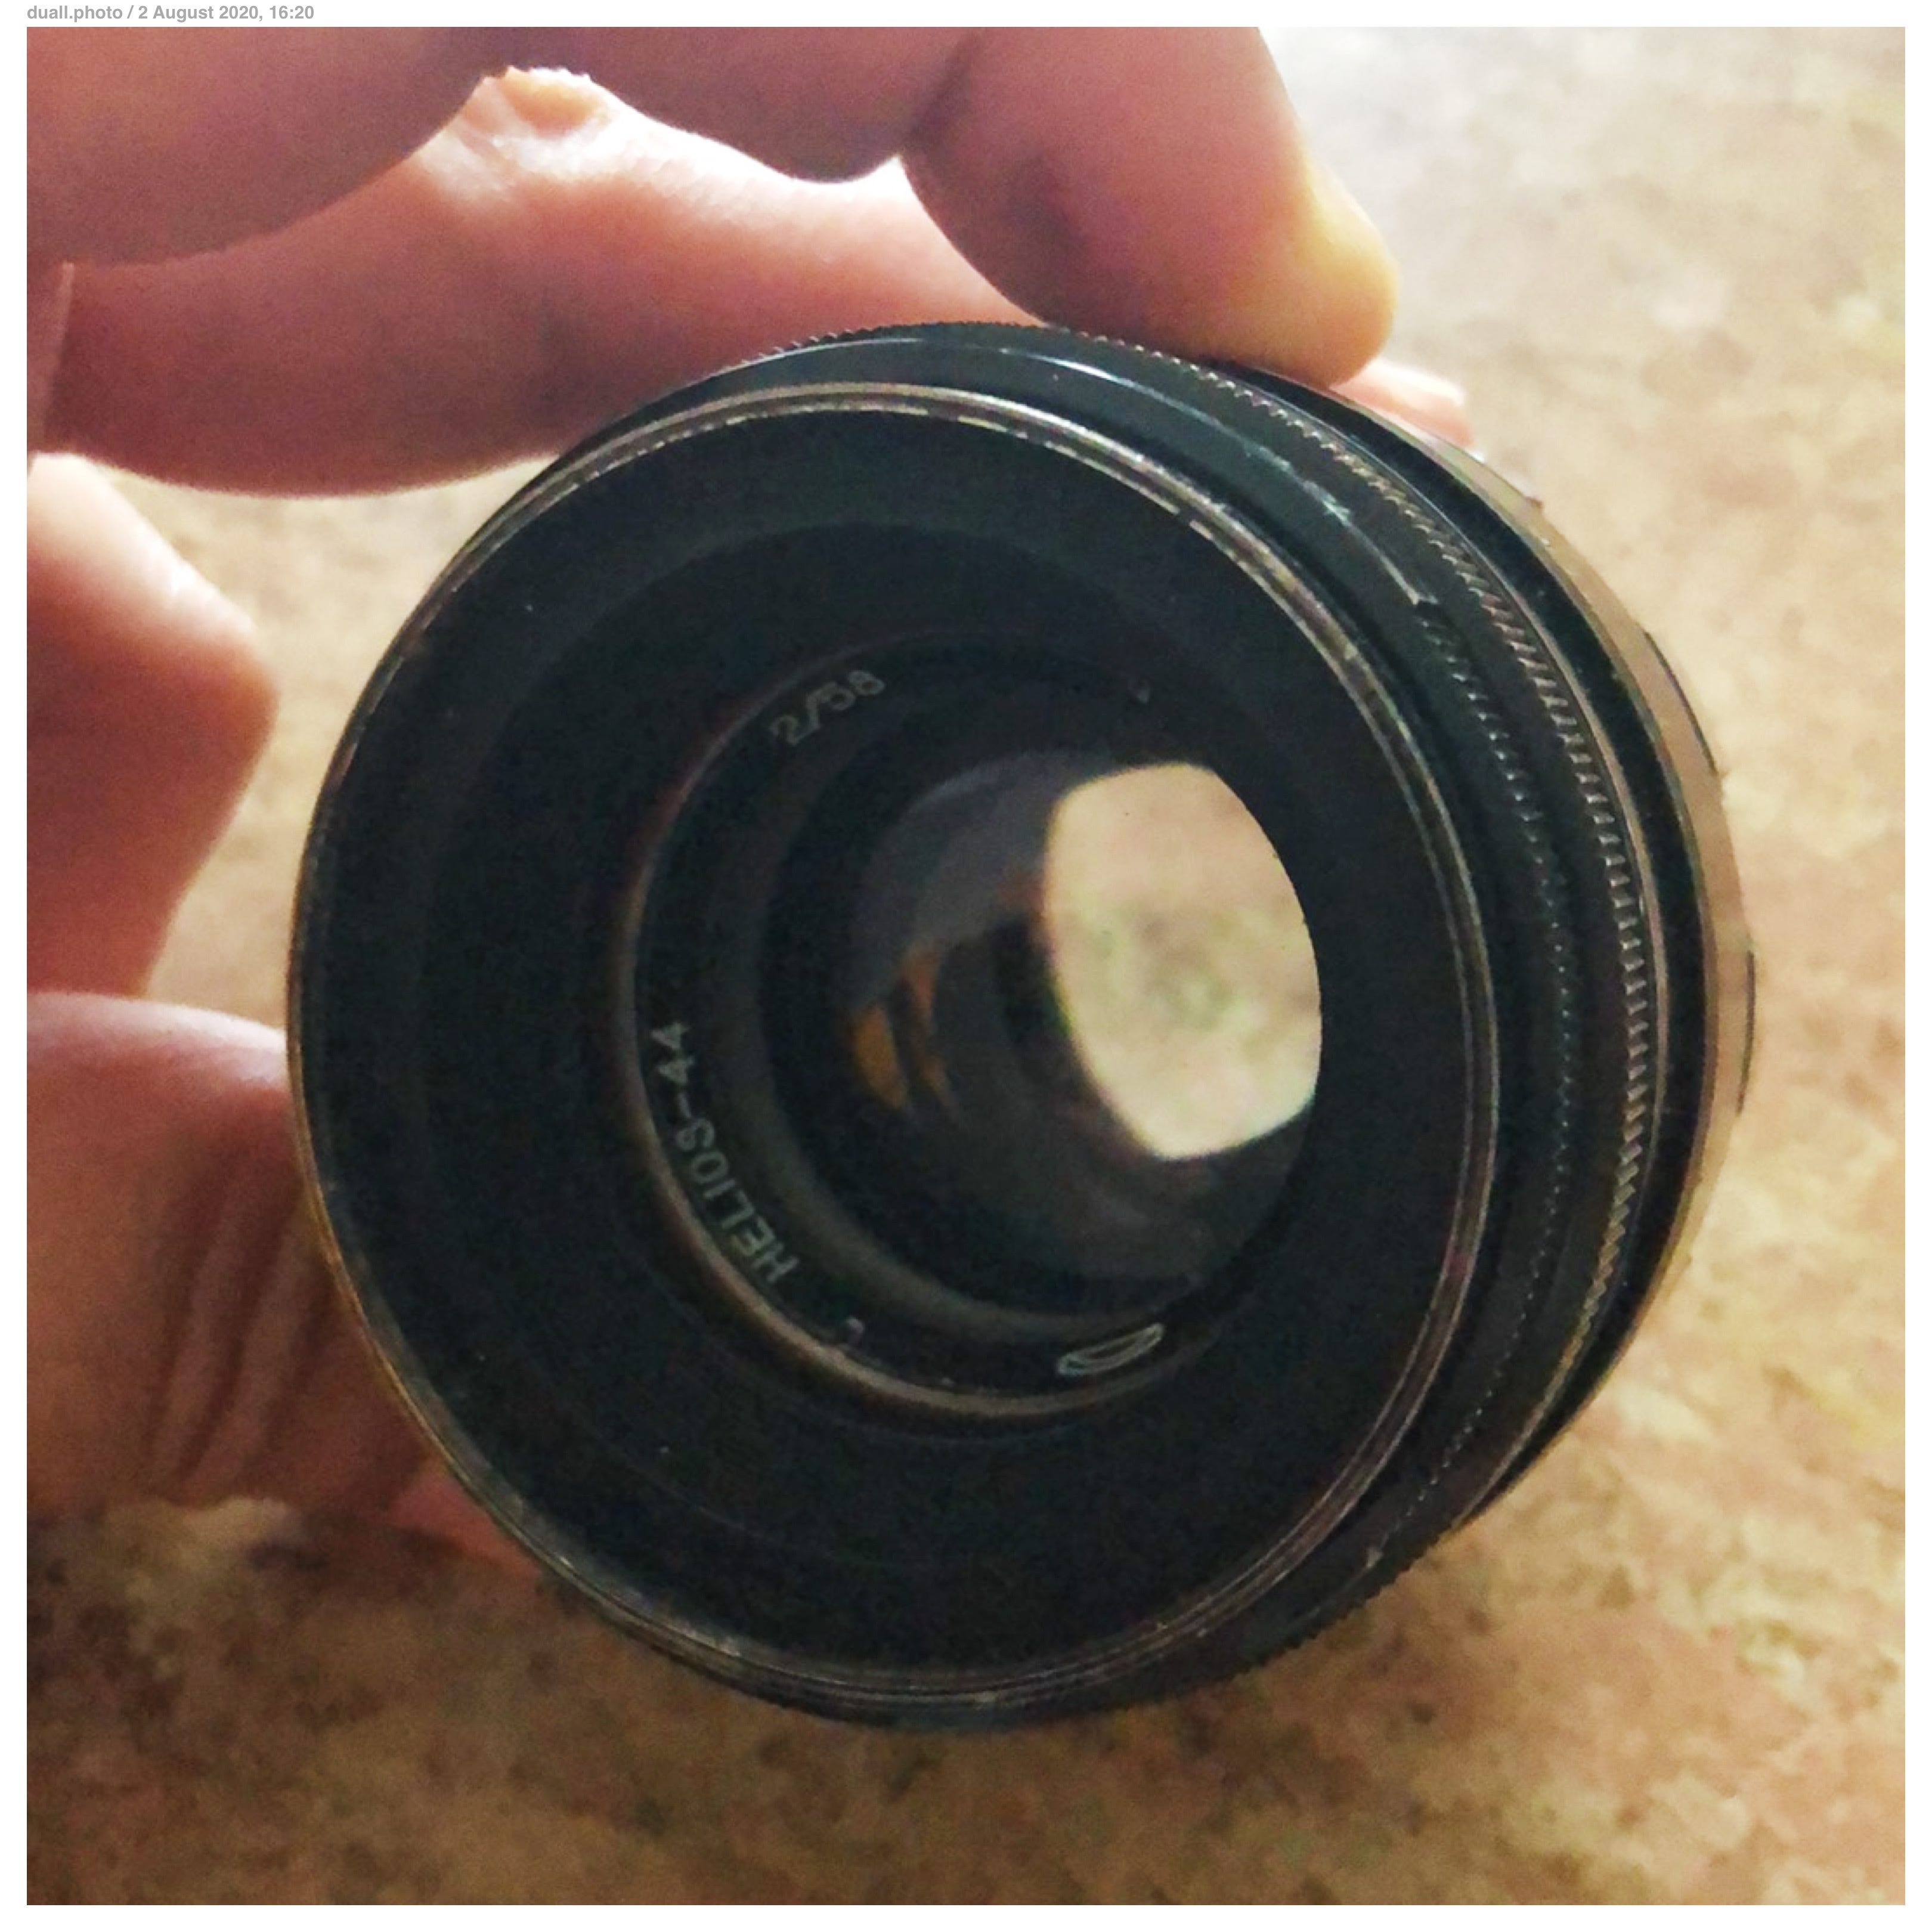 Helios 44 58mm F2 0 M39 Lens Review By Tristan Zand The Raw Camera Von Cam Medium